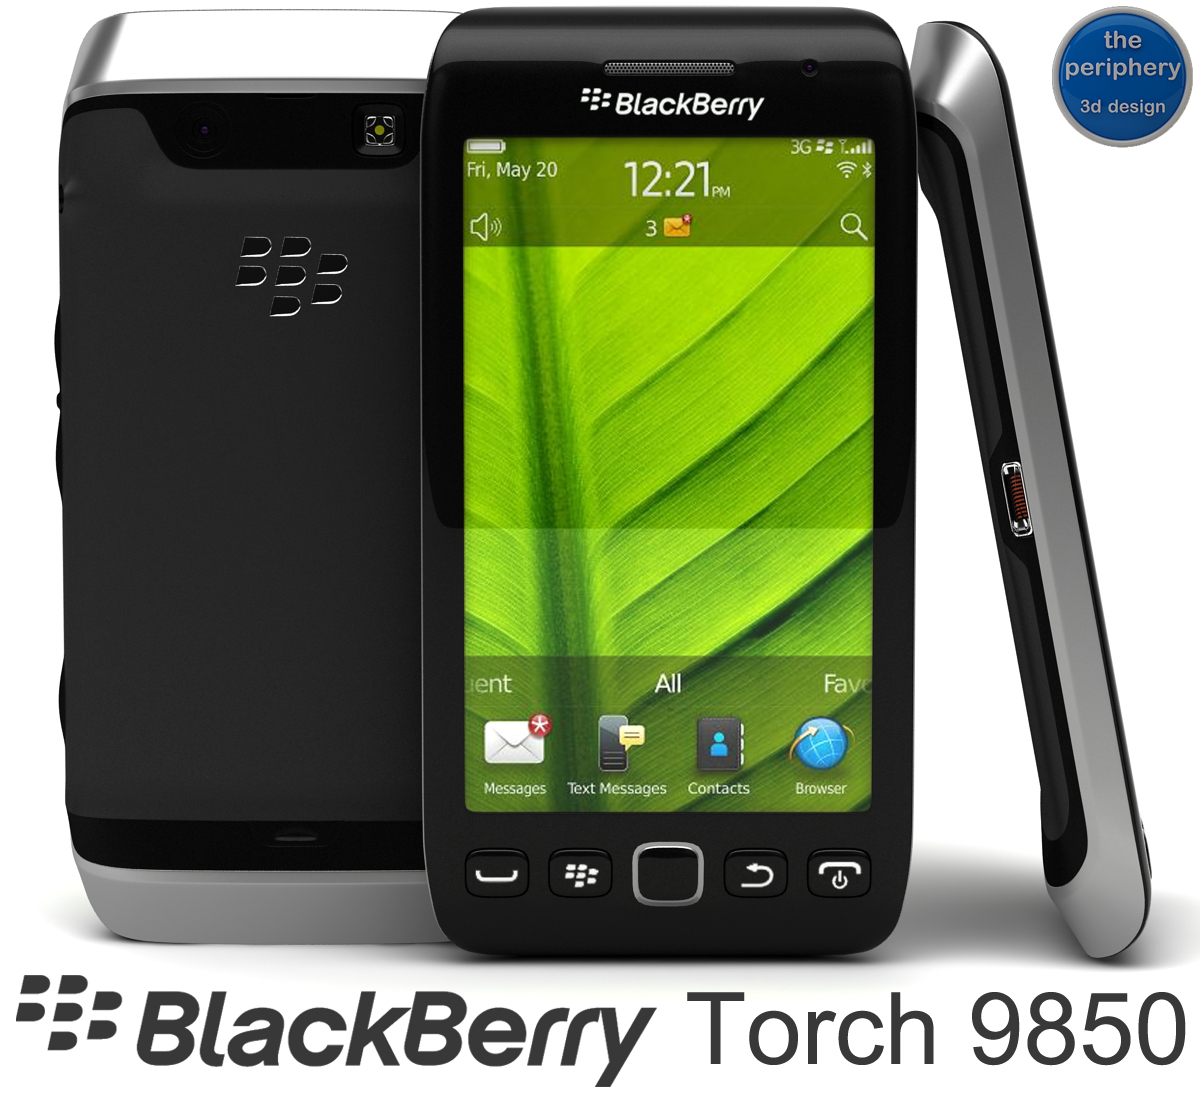 ... of blackberry torch 9850 bb harga spesifikasi terupdate 2012 wallpaper